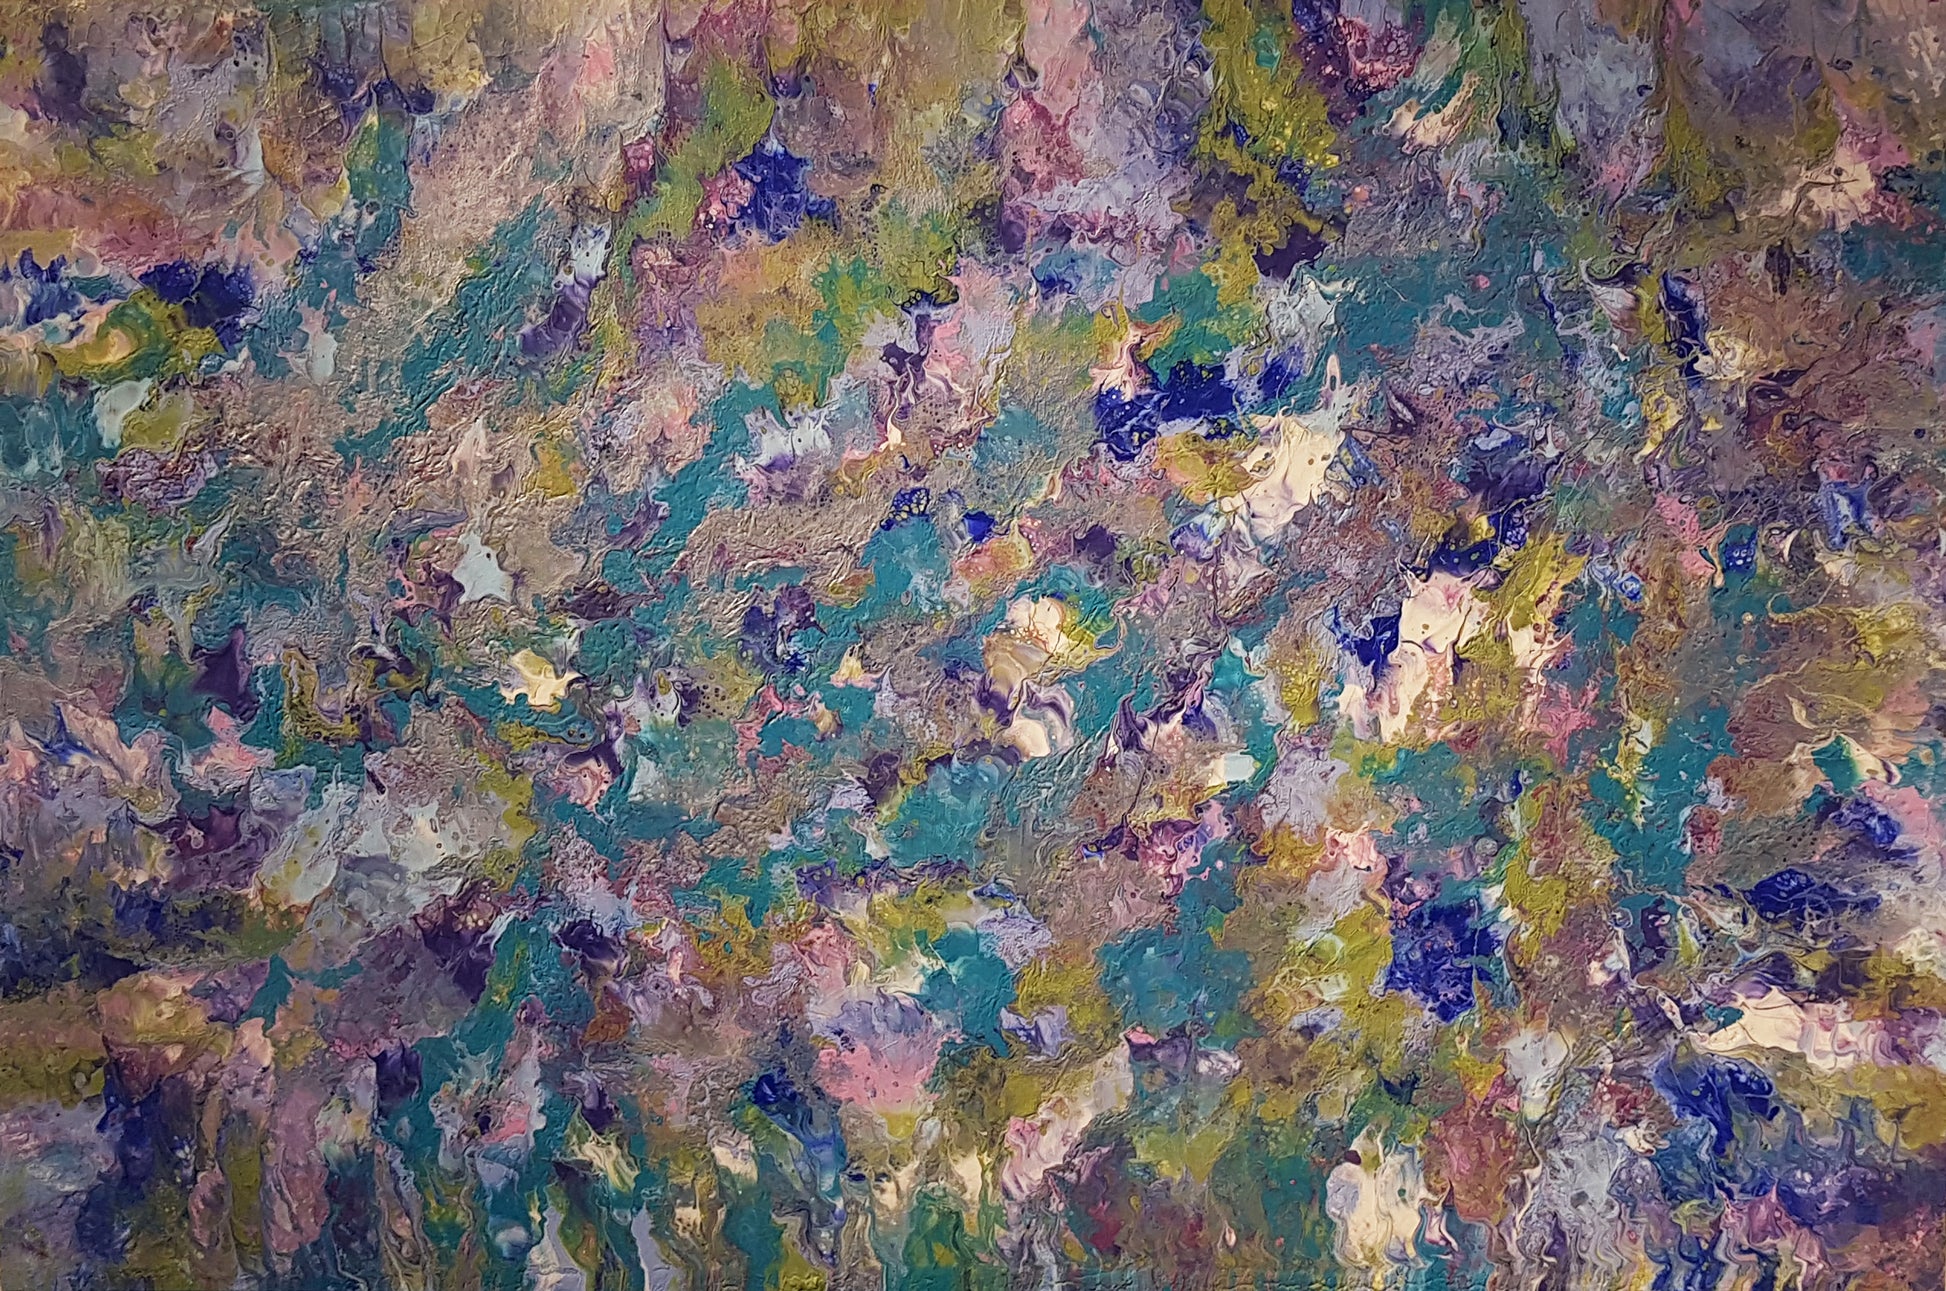 Poseidon's-Garden-by-Alexandra-Romano-Buy-Art-Online-Turquoise-Teal-Silver-Purple-Abstract-Paintings-Gallery-Toronto